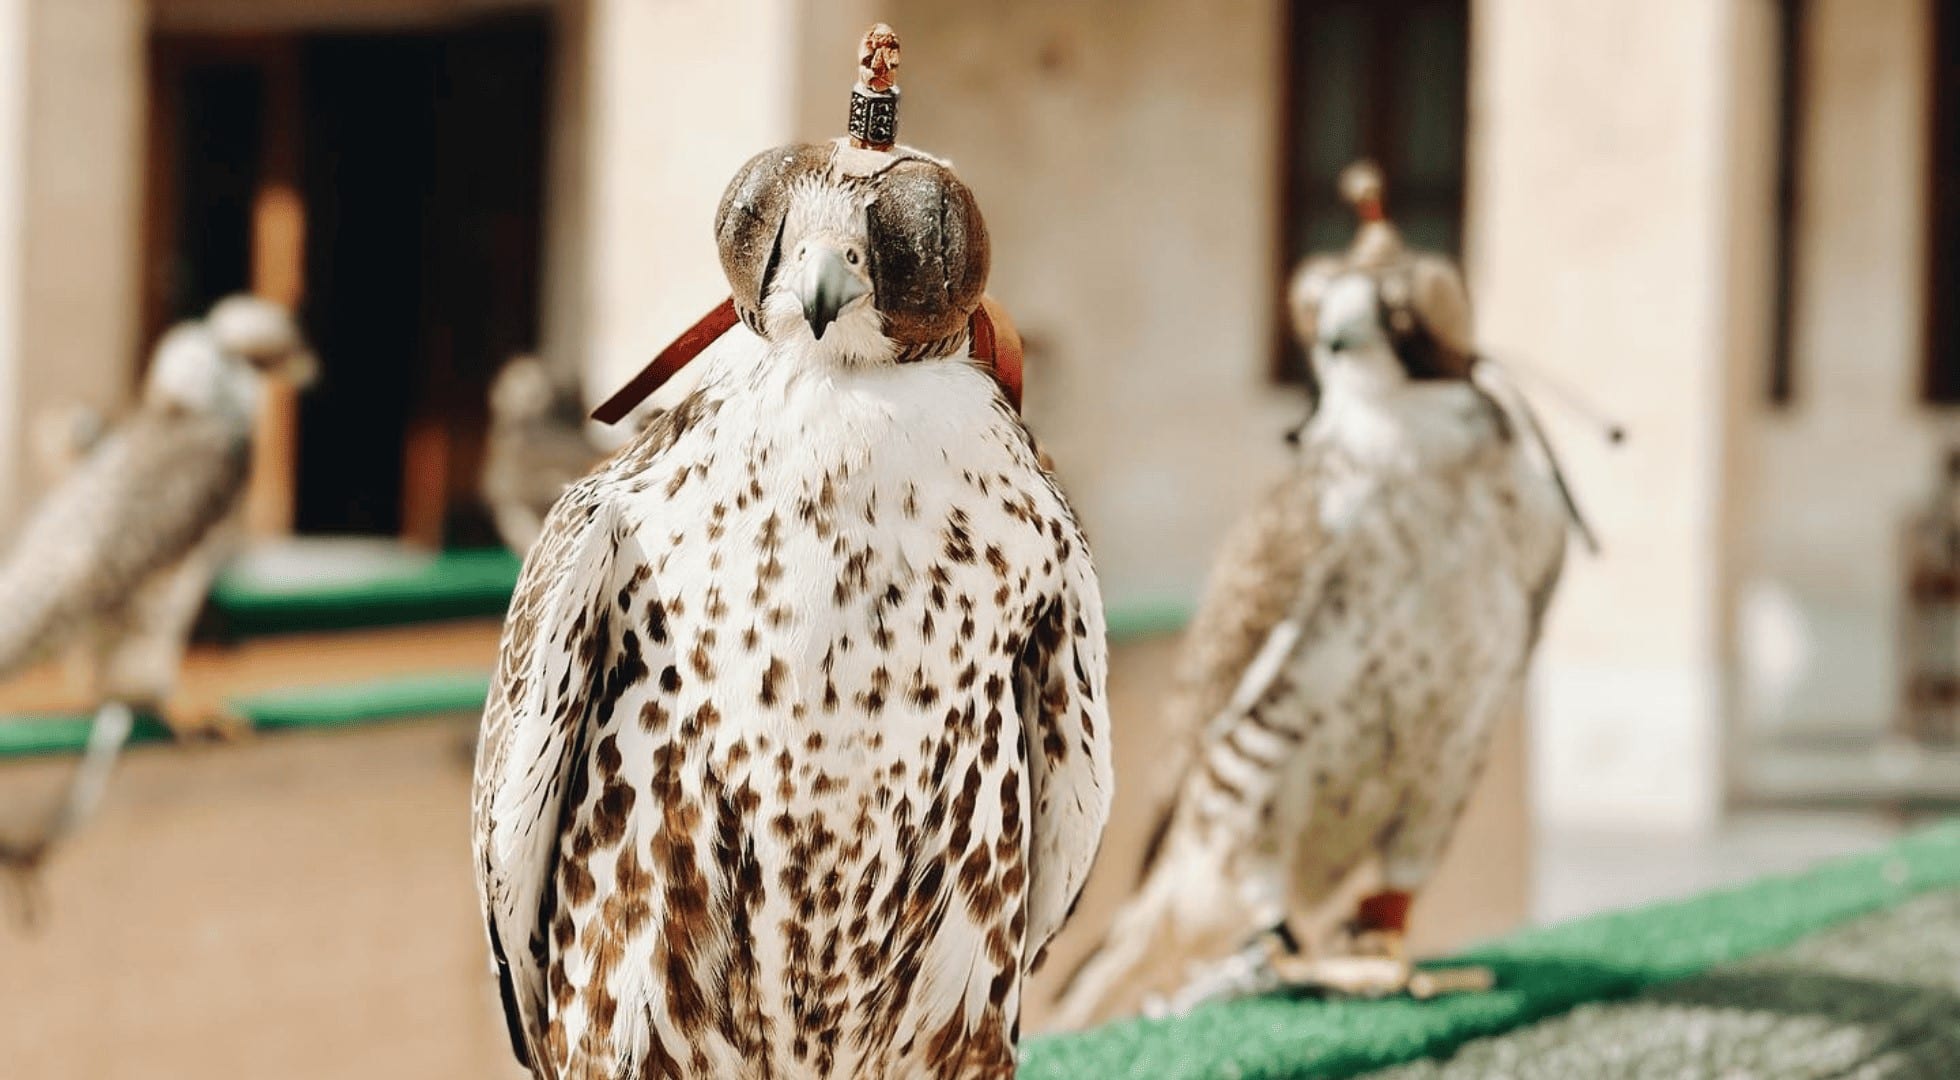 qatar travel guide 2023 - falcon